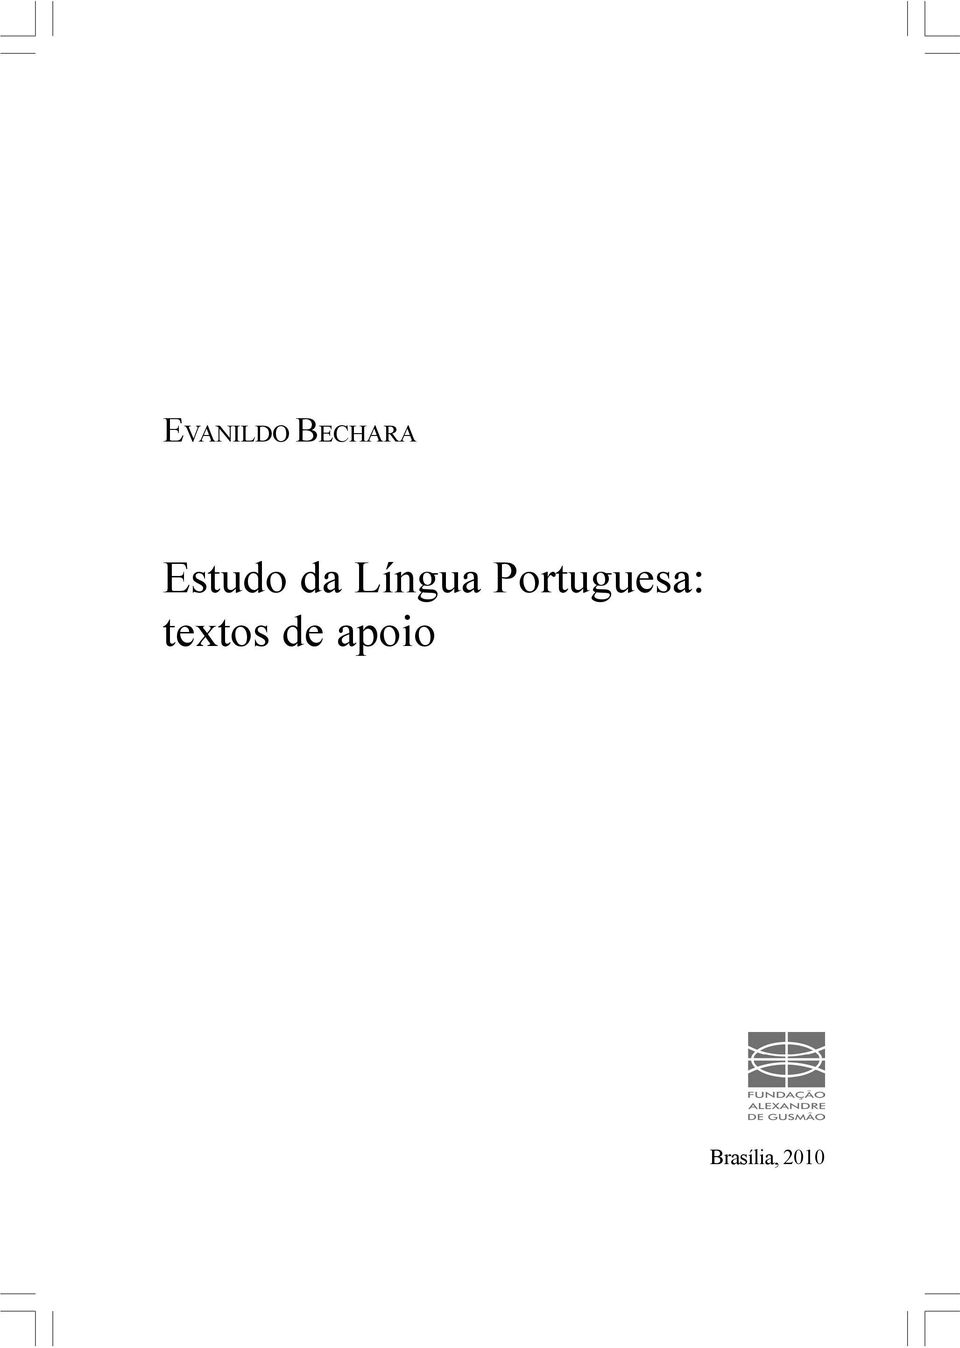 Portuguesa: textos